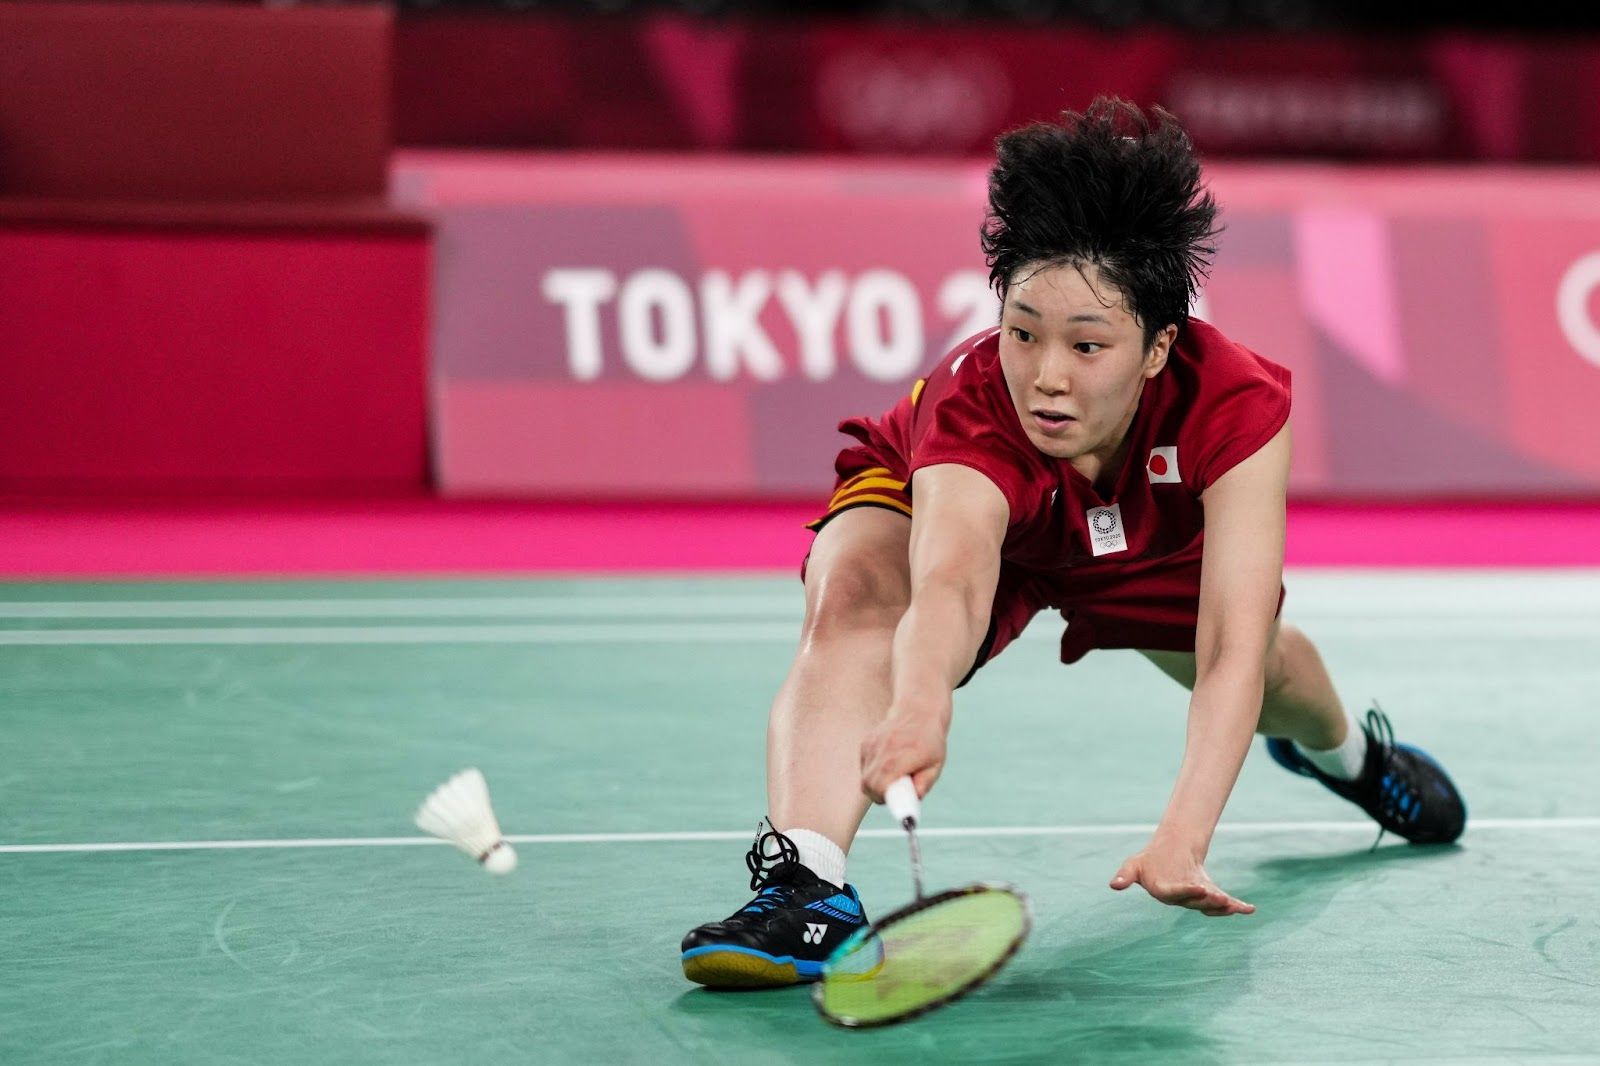 Badminton: Akane Yamaguchi and Sayaka Takahashi to clash for French Open title